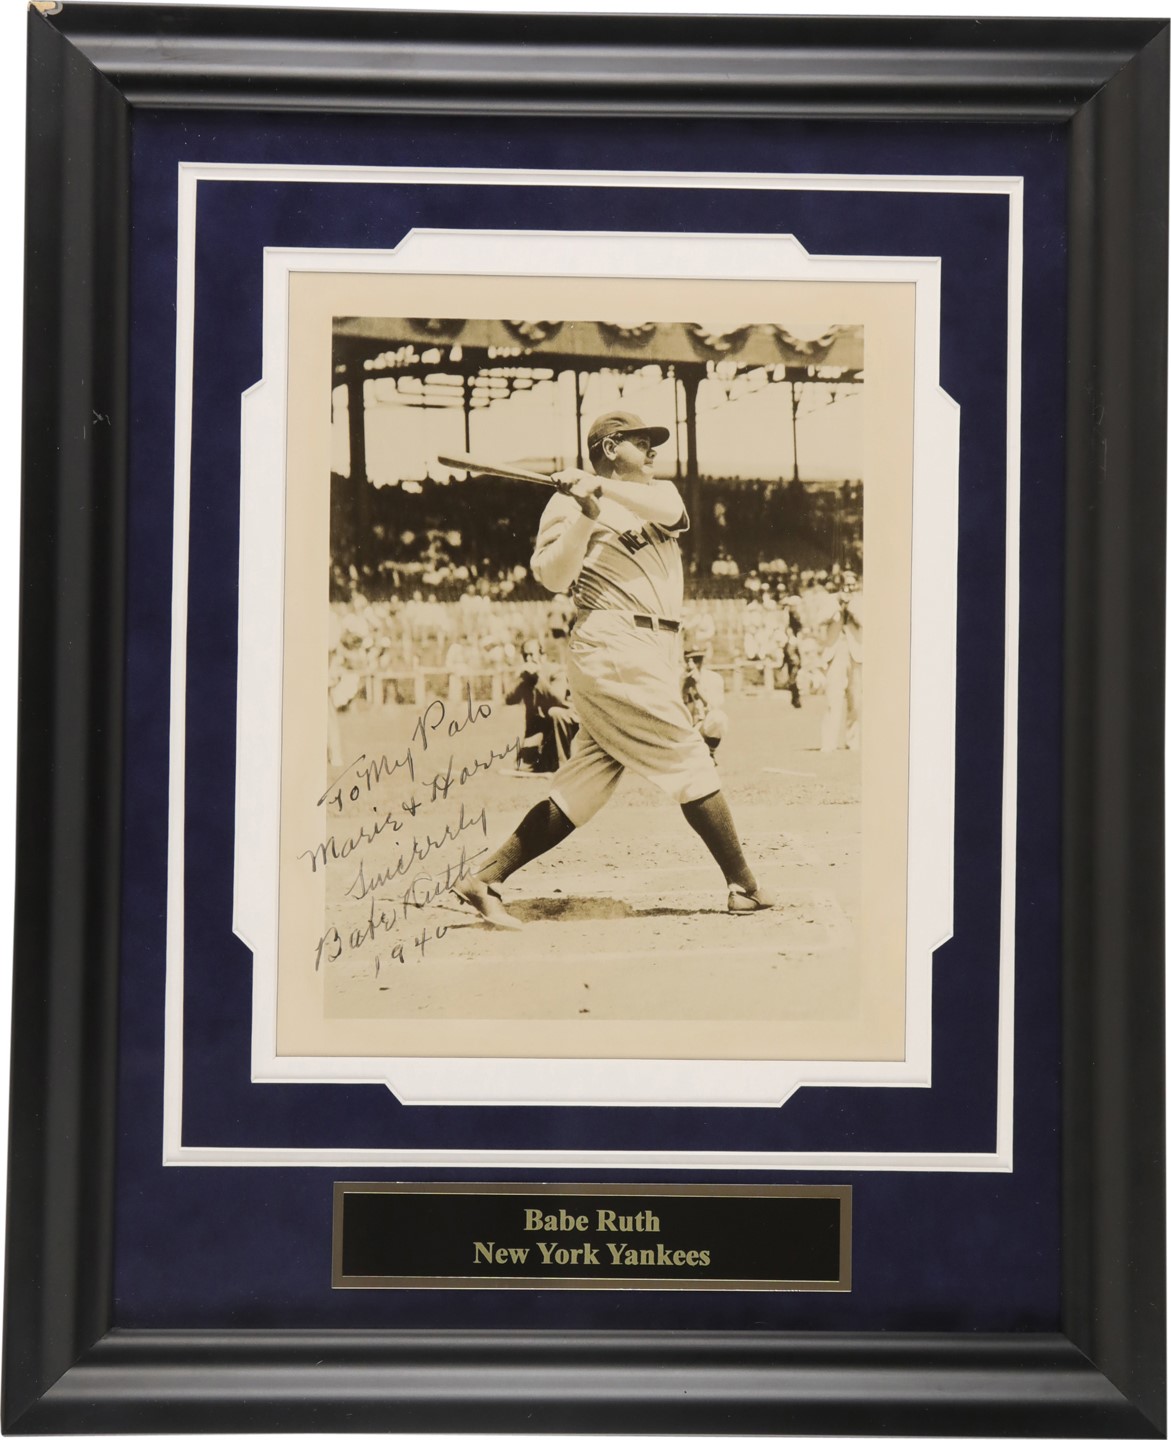 - Beautiful 1940 Babe Ruth Signed Photograph (PSA)